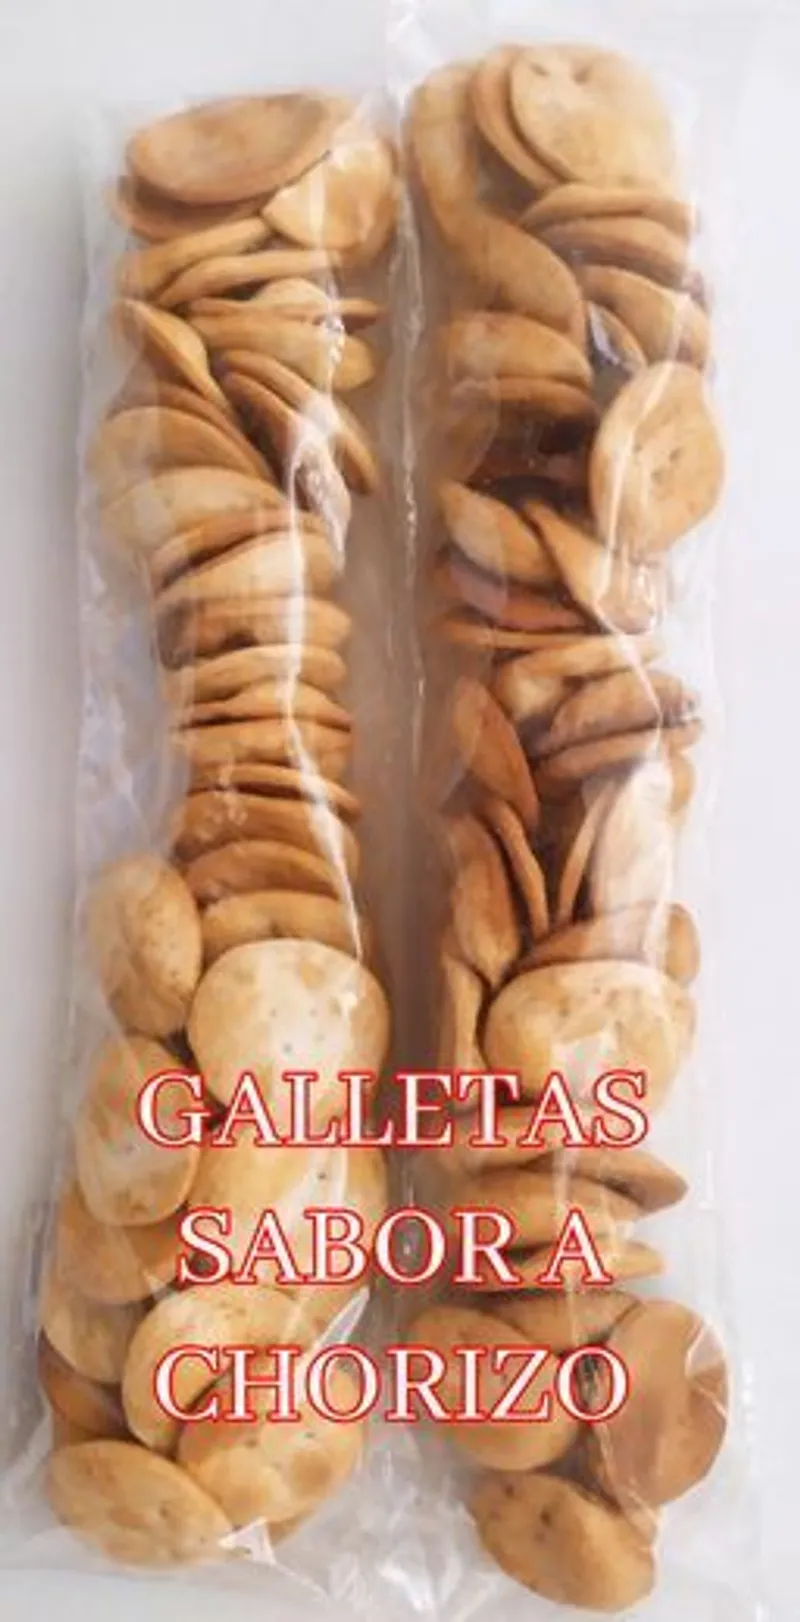 GALLETAS SABOR A CHORIZO (6 packs)